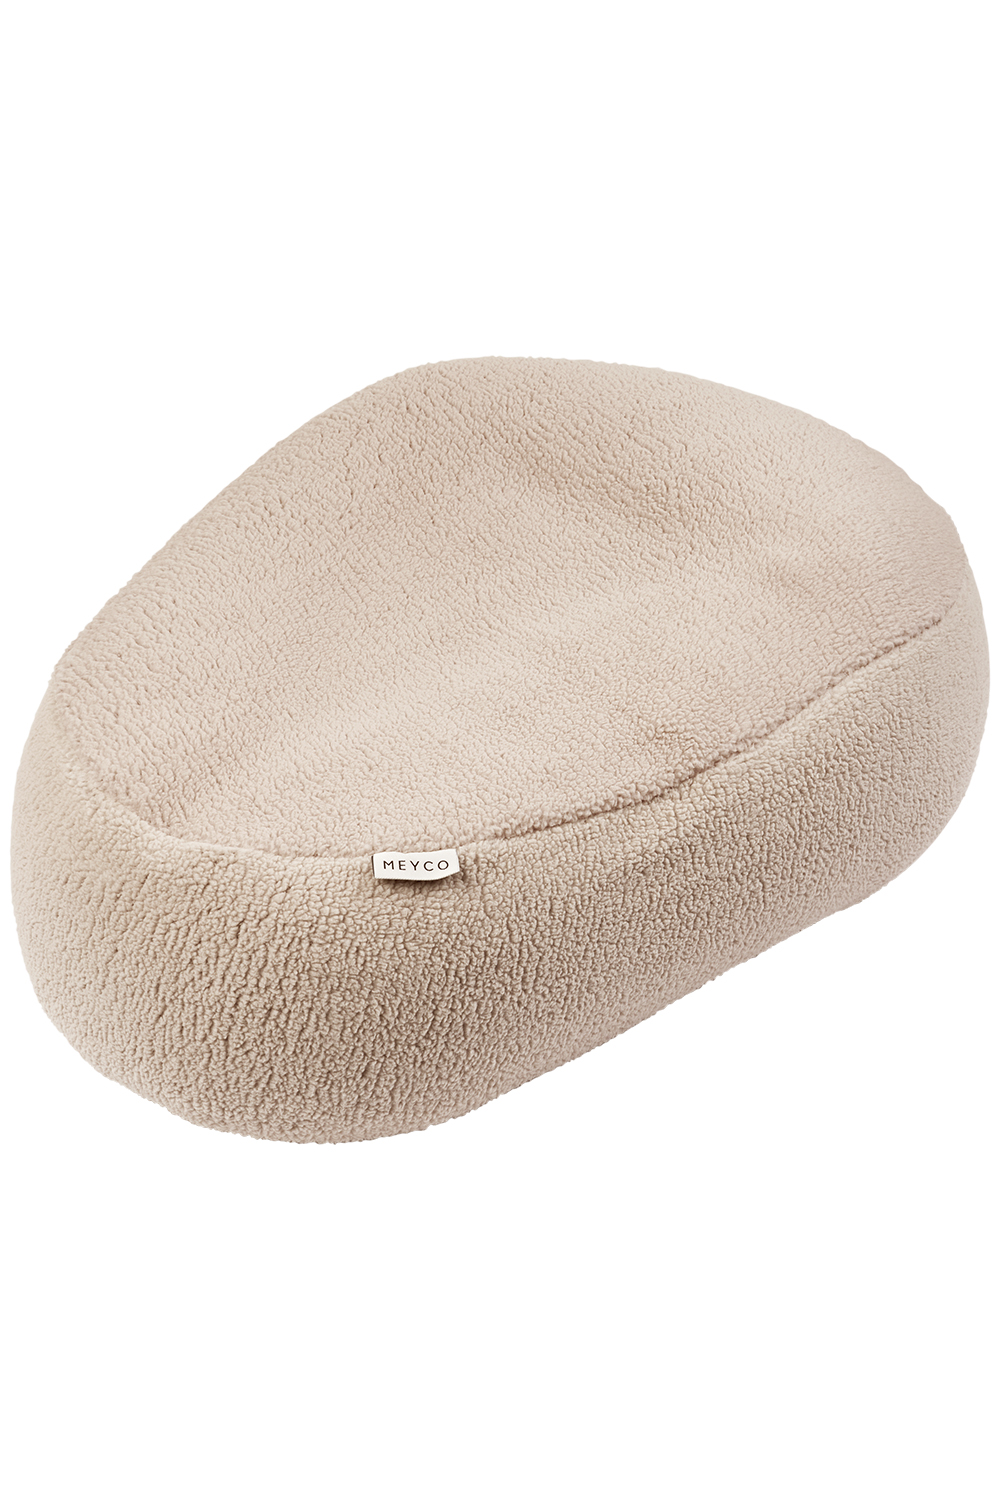 Relax cover for nursing pillow Teddy - sand